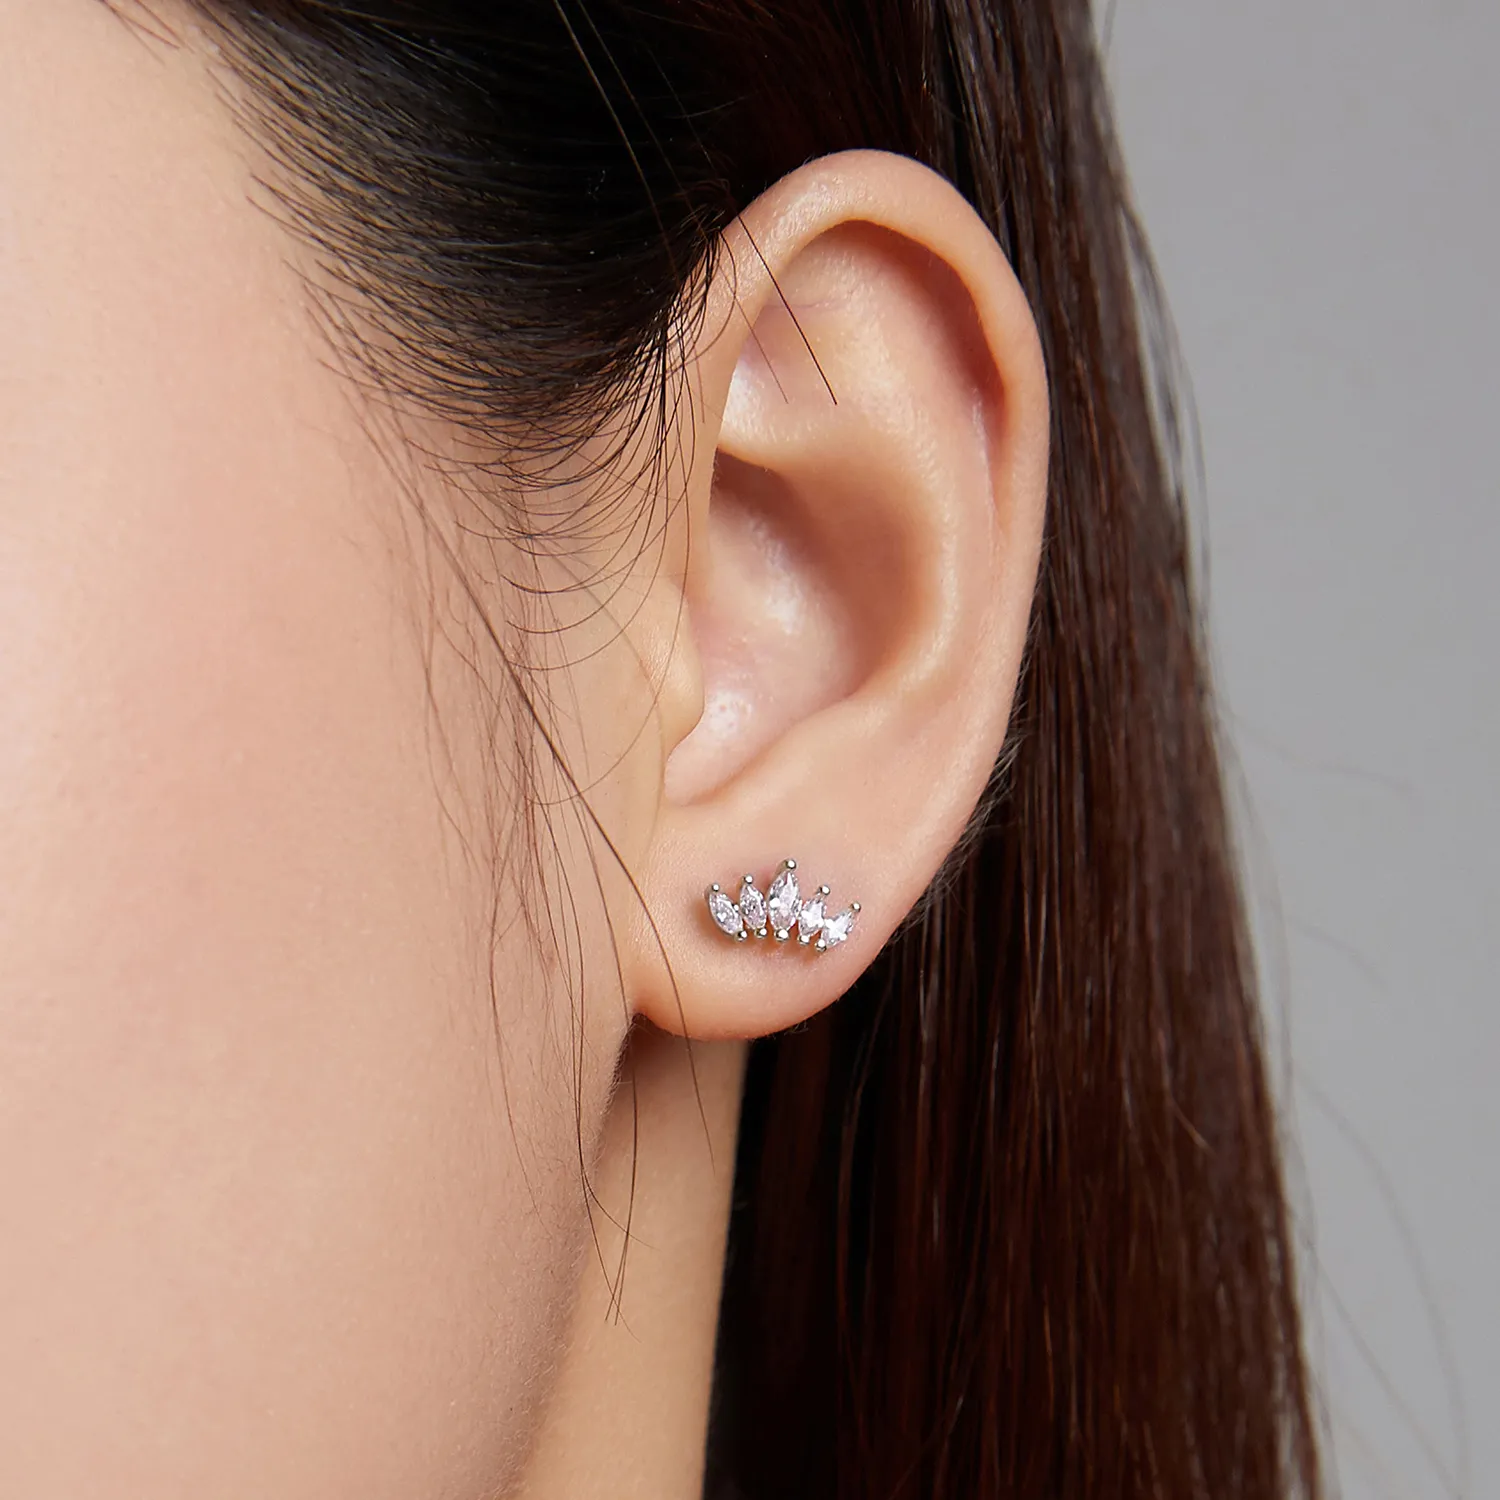 Pandora Style Shining Crown Stud Earrings - BSE521